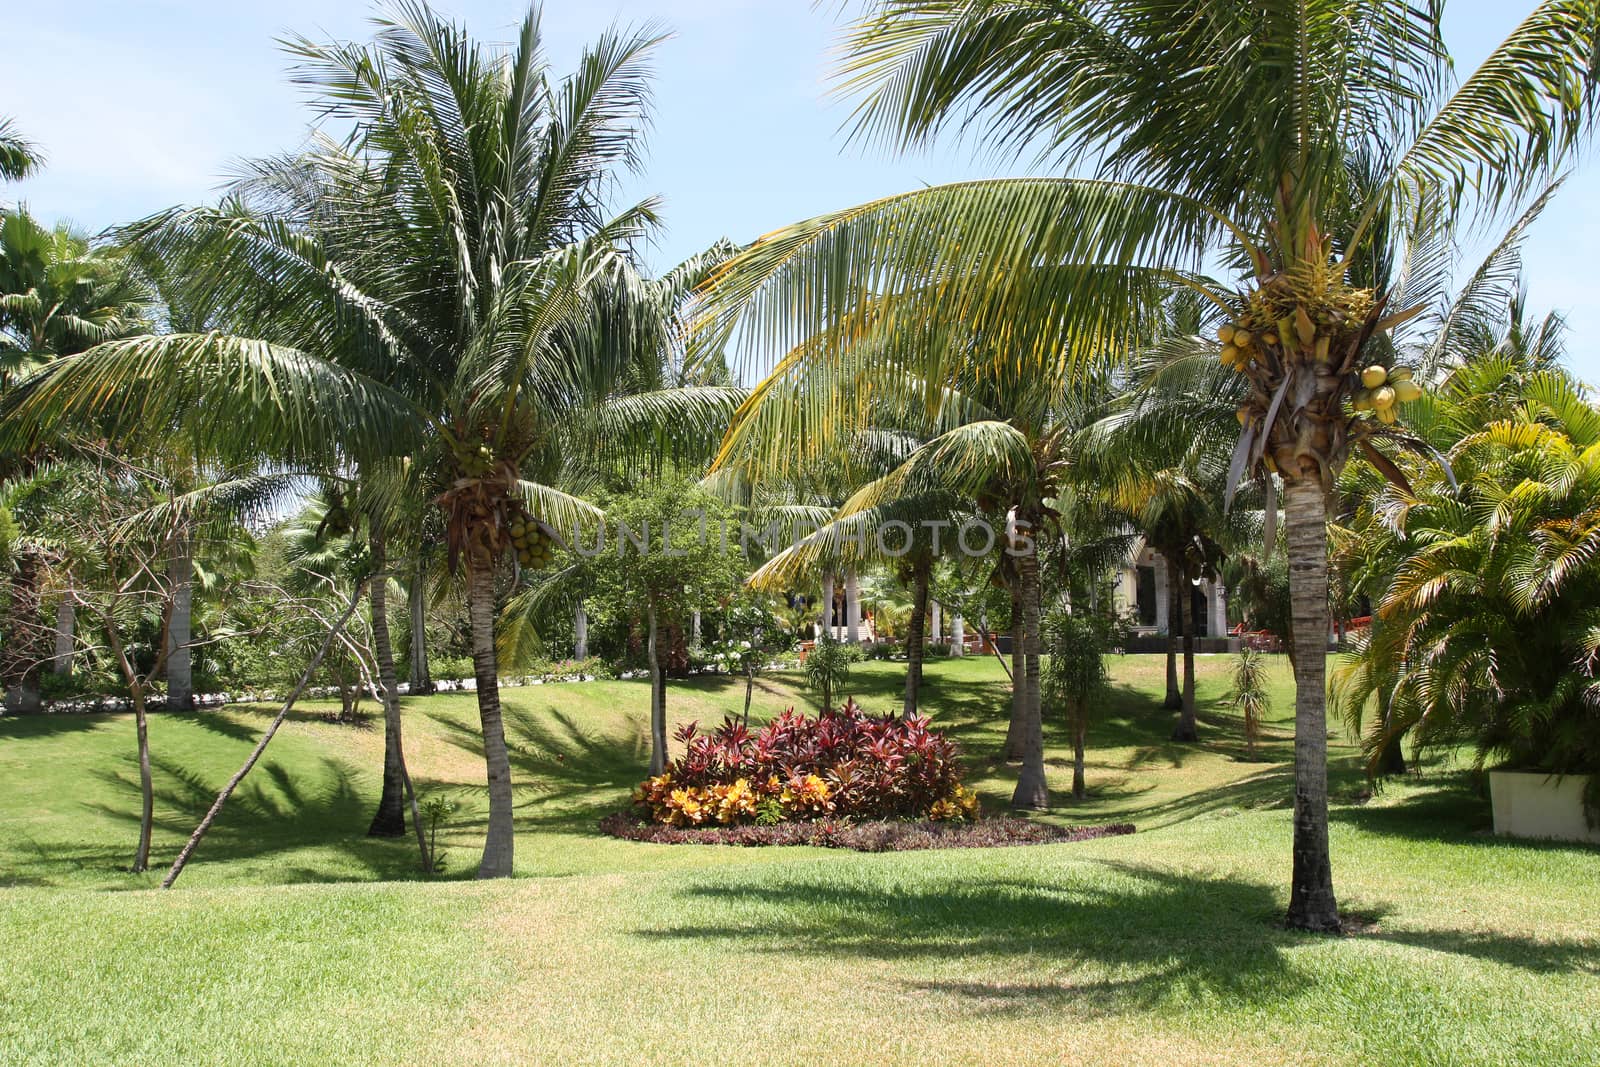 Tropical palm garden in beautiful paradise